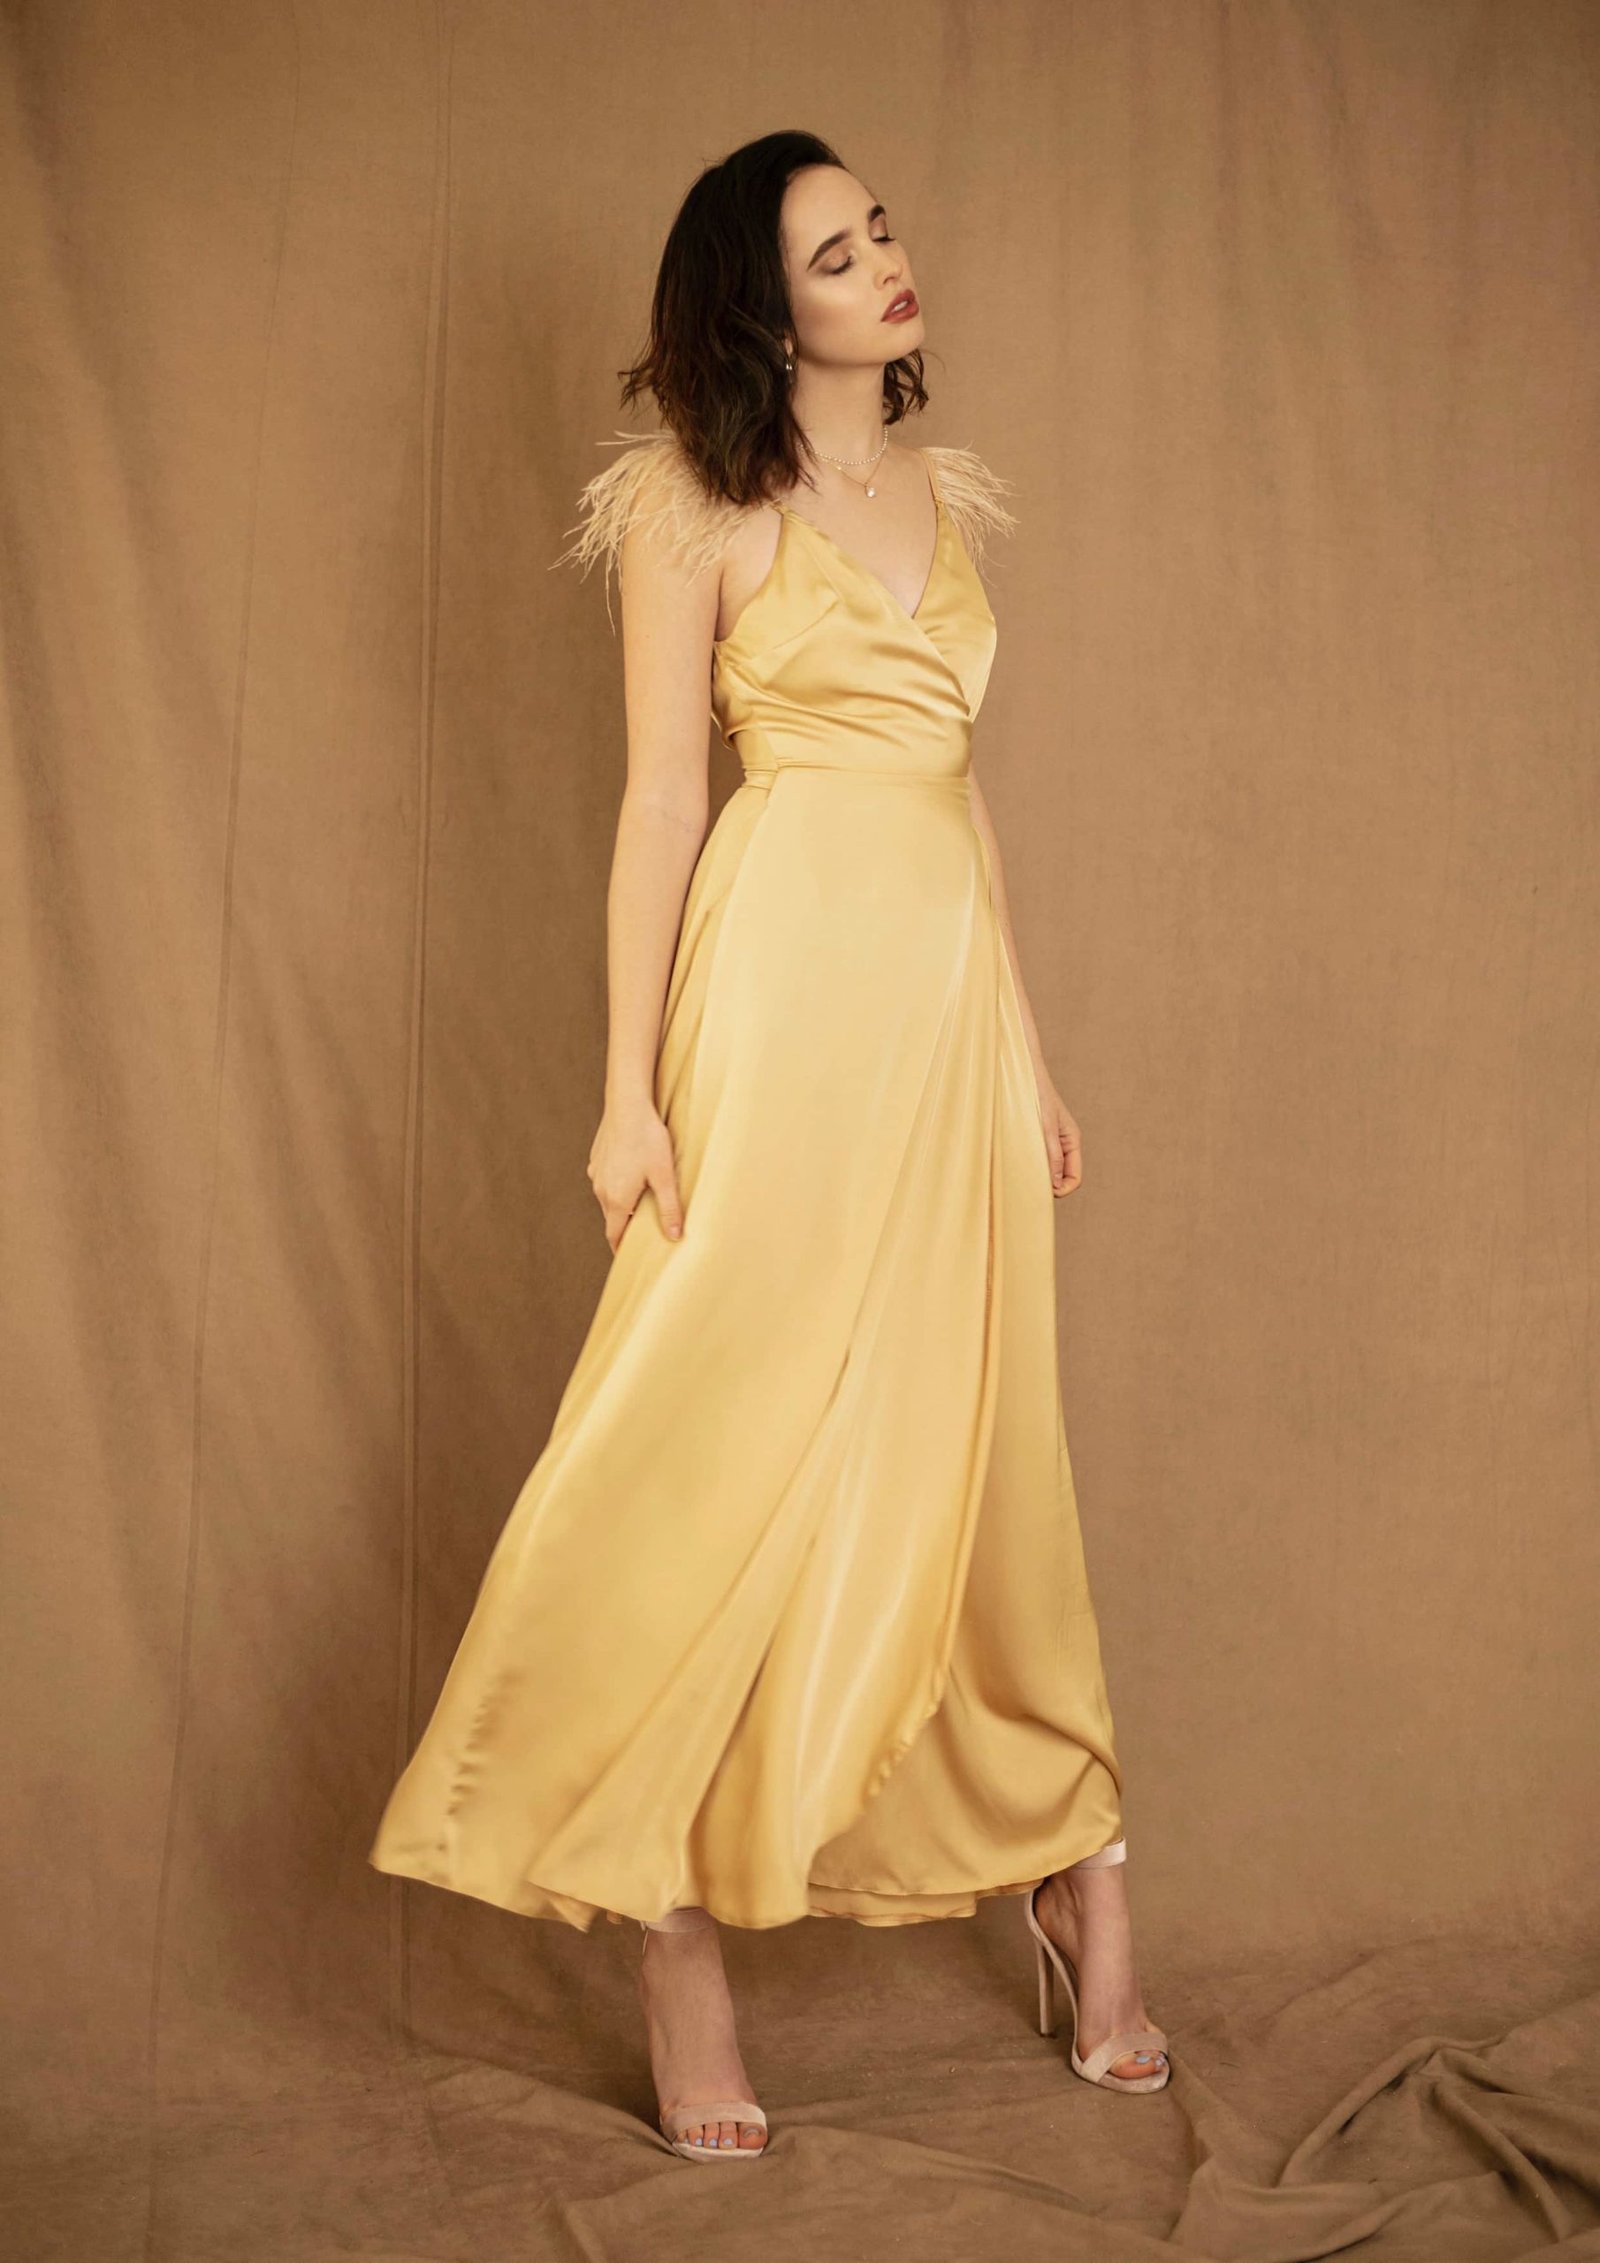 Golden Hour Dress elegant fashion style your musa la musa model 2020 2021